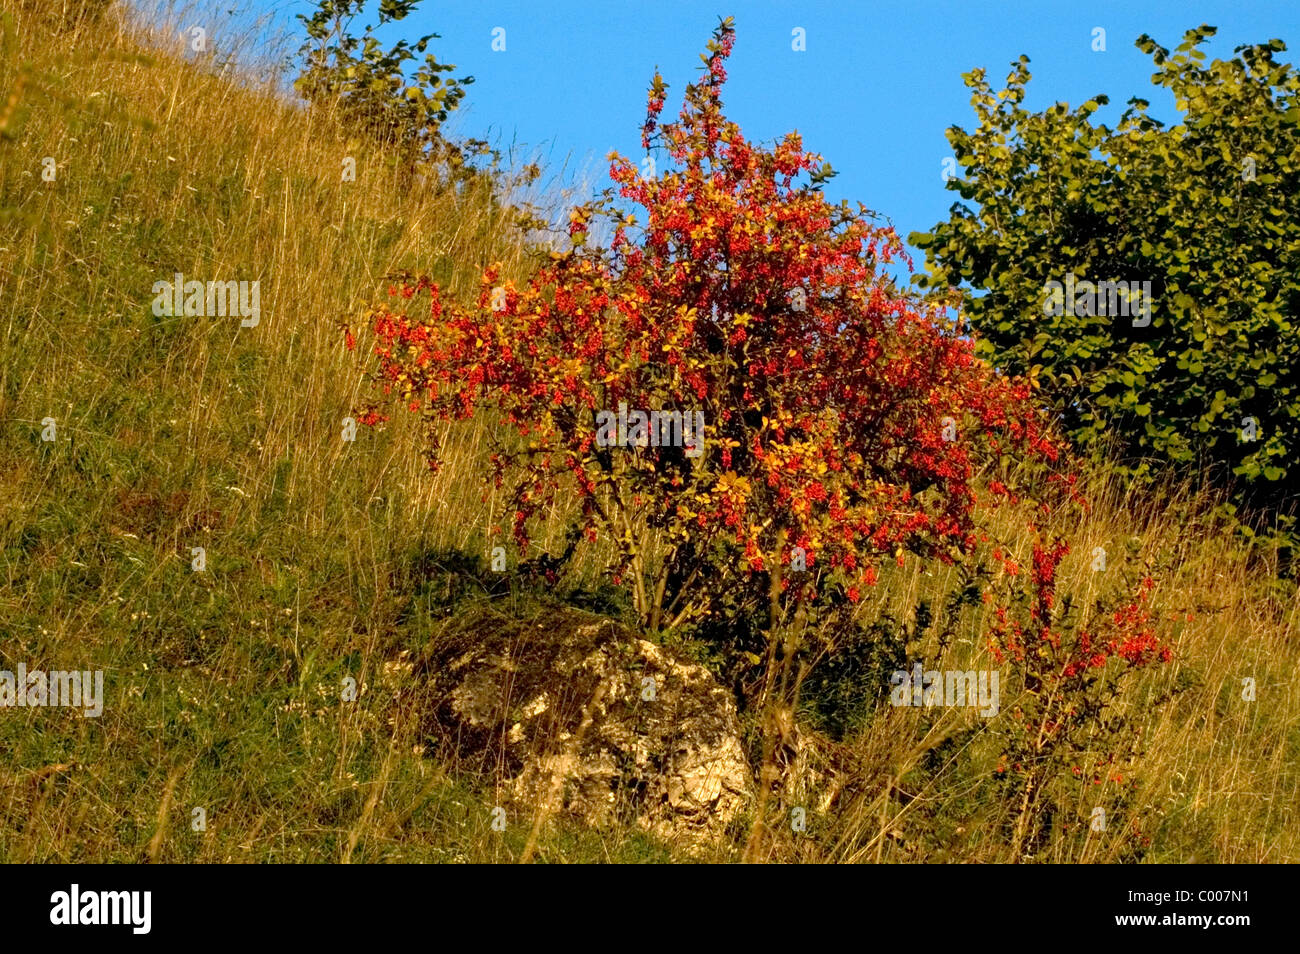 Sauerdorn, gewoehnliche Berberitze, Berberis vulgaris, Barberry, Jaundice berry, Ostalbkreis, Deutschland, Germany  Stock Photo